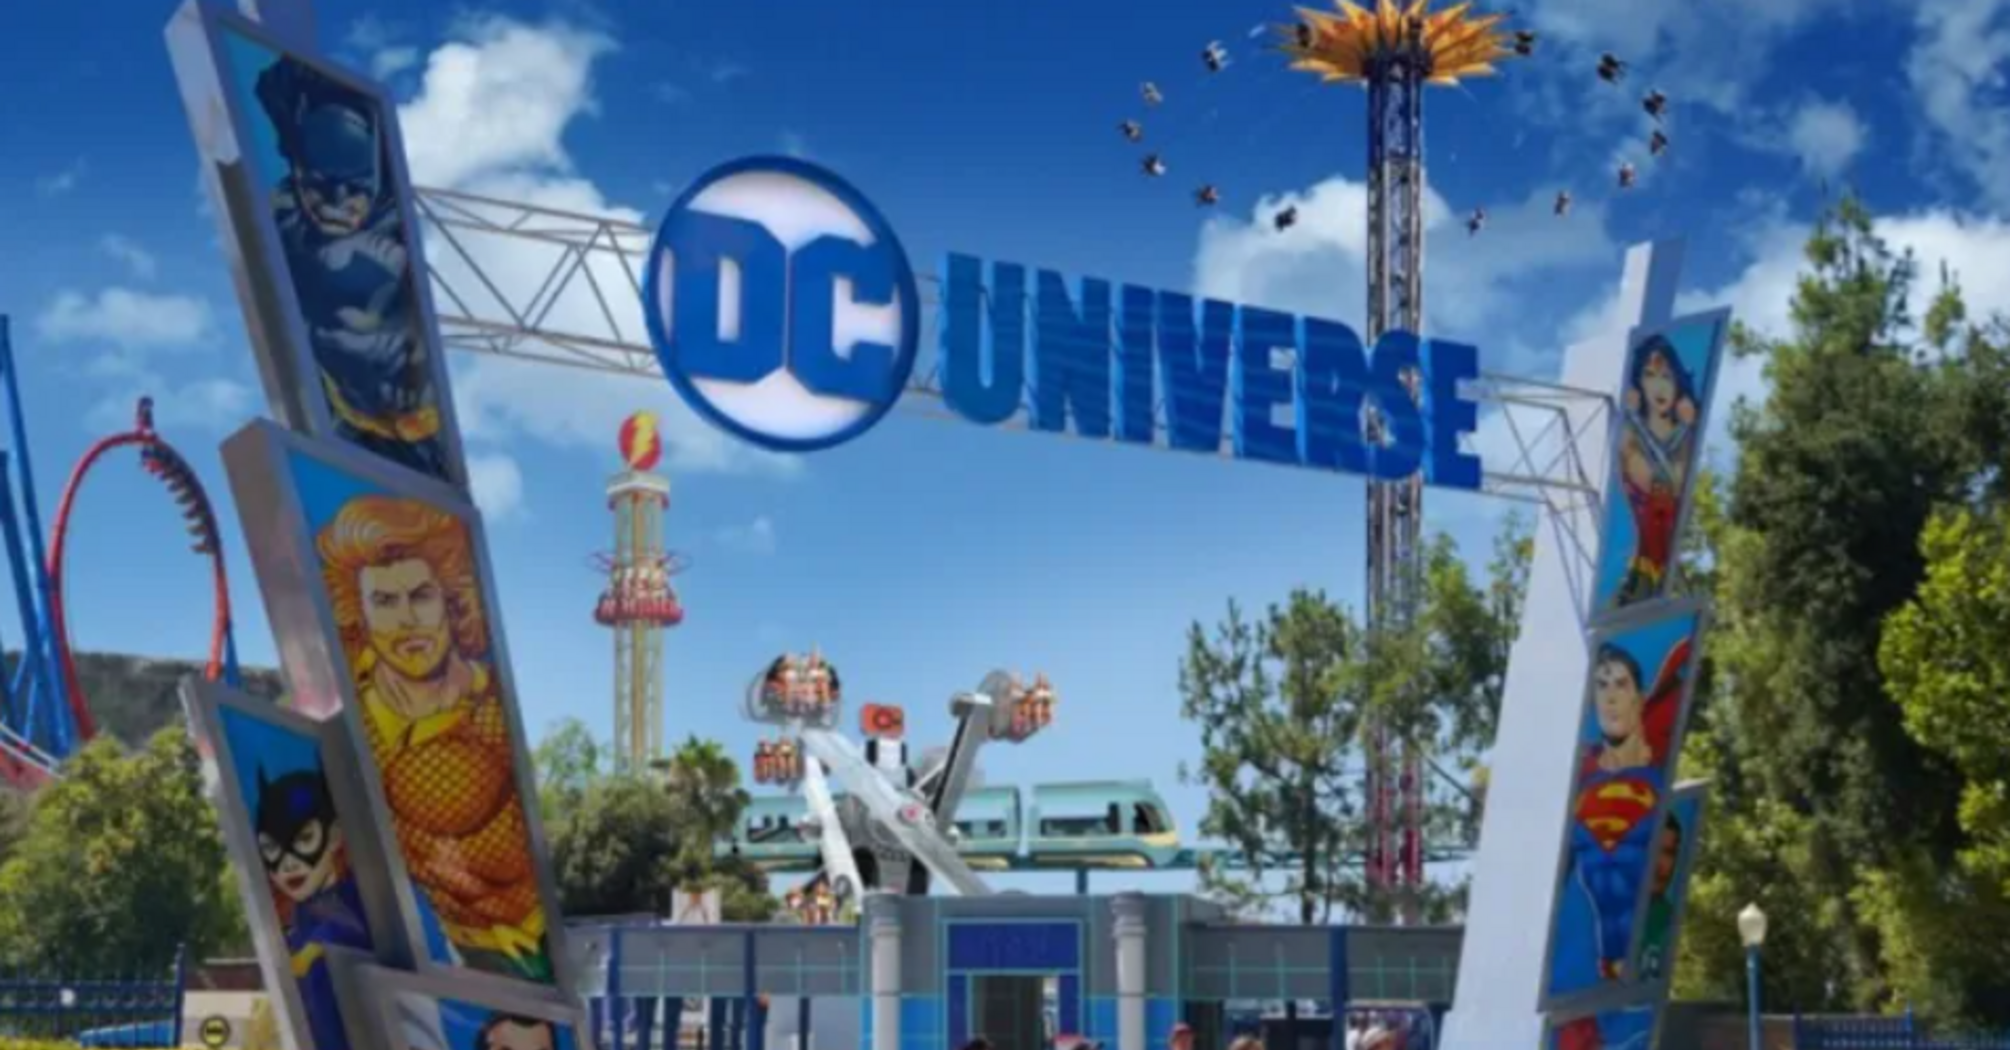 DC Universe at Six Flags Fiesta Texas